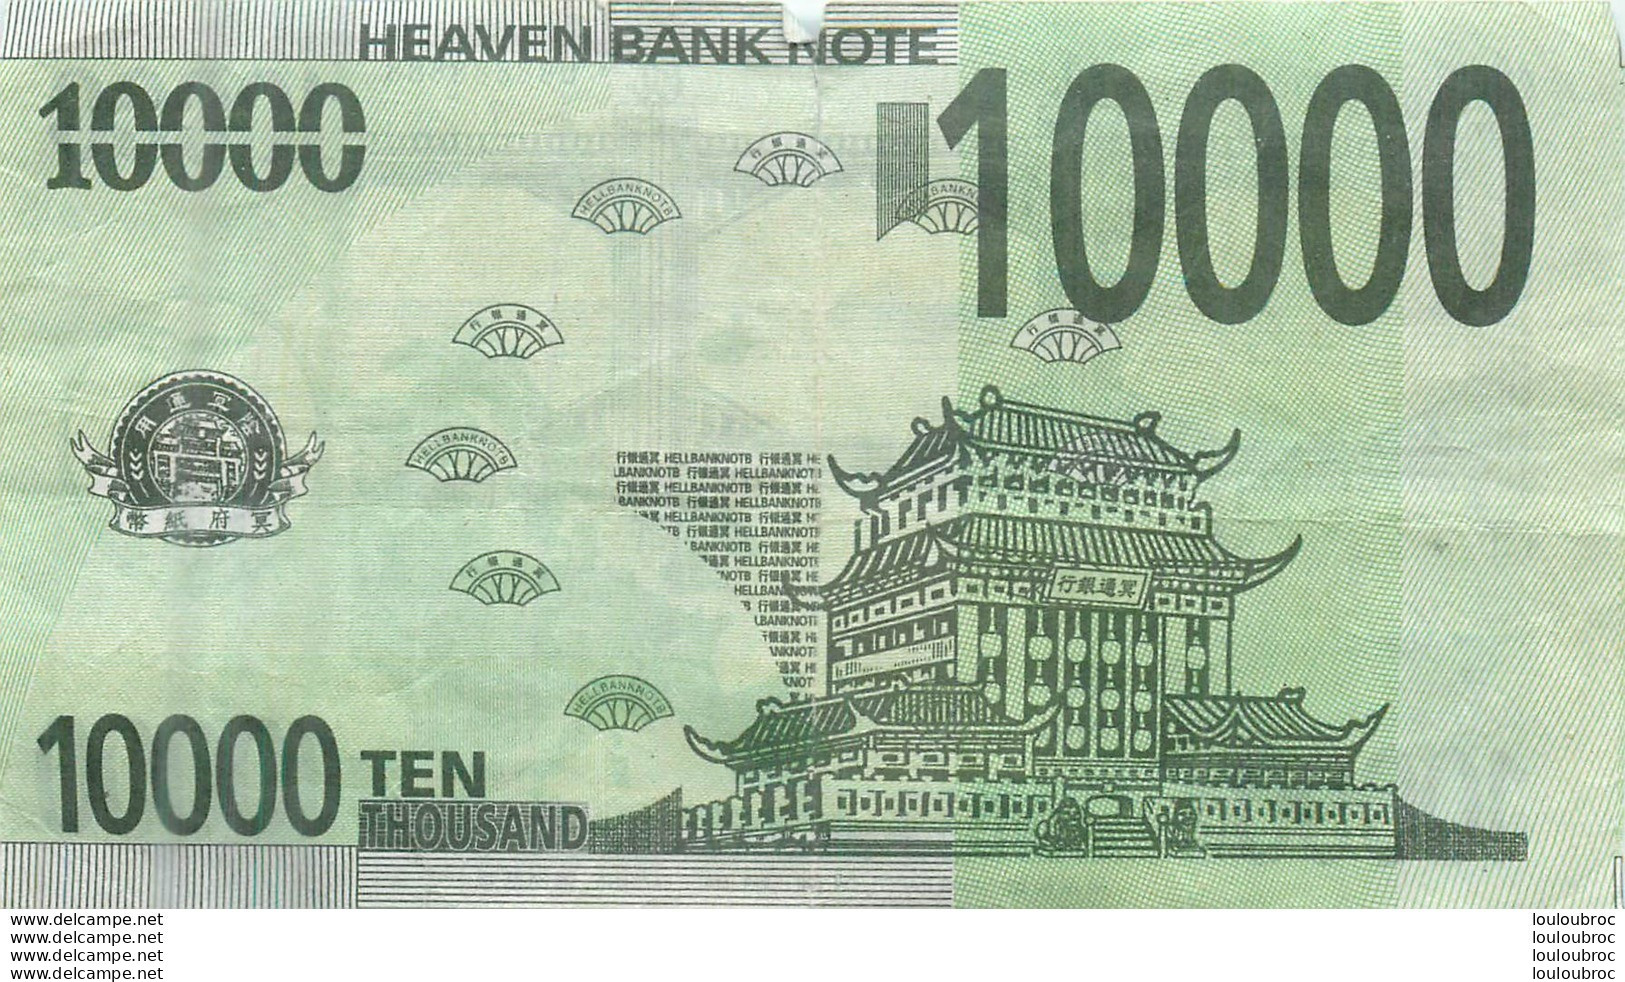 BILLET  10000 YUK WONG  HEAVEN BANK NOTE - Chine